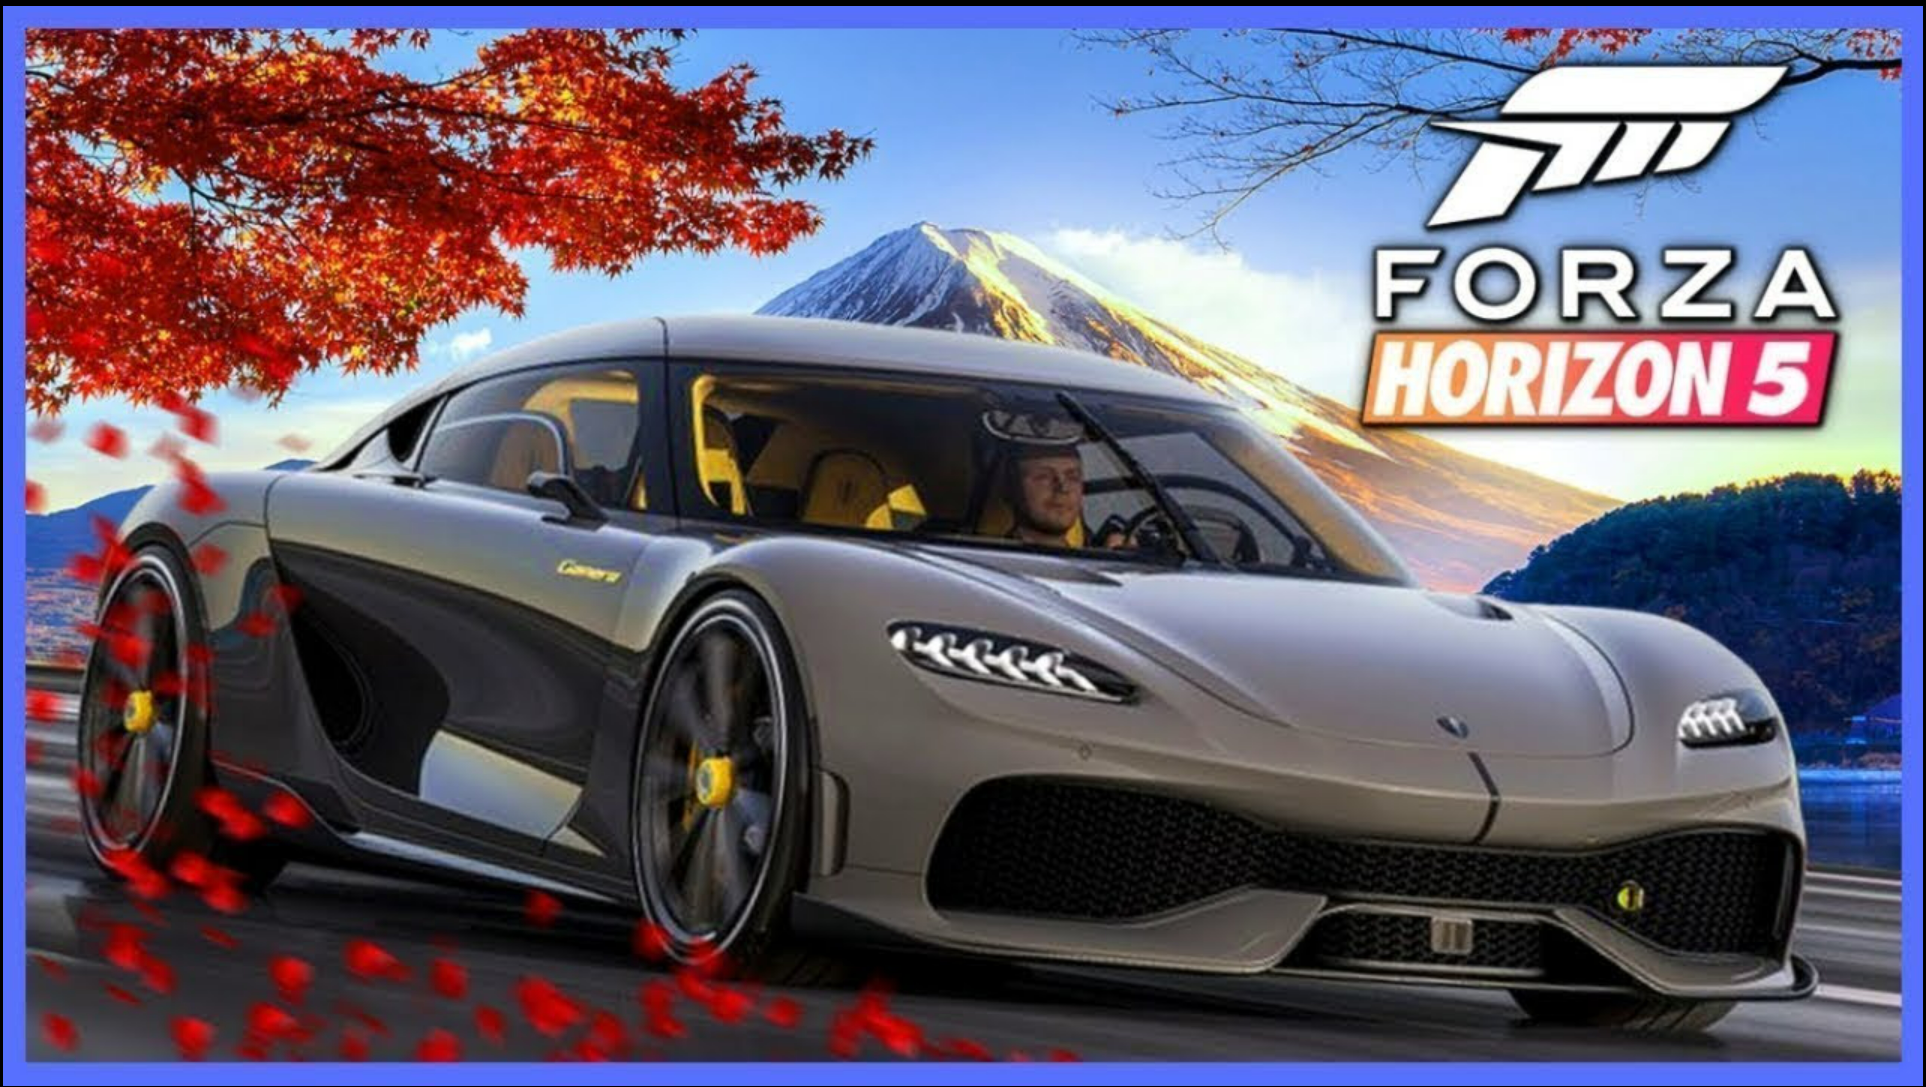 Форза хорайзен 5. Forza Horizon 5 Premium Edition. Forza Horizon 5 Xbox one. Форза хорайзон 5 гонки. Forza horizon 5 купить xbox